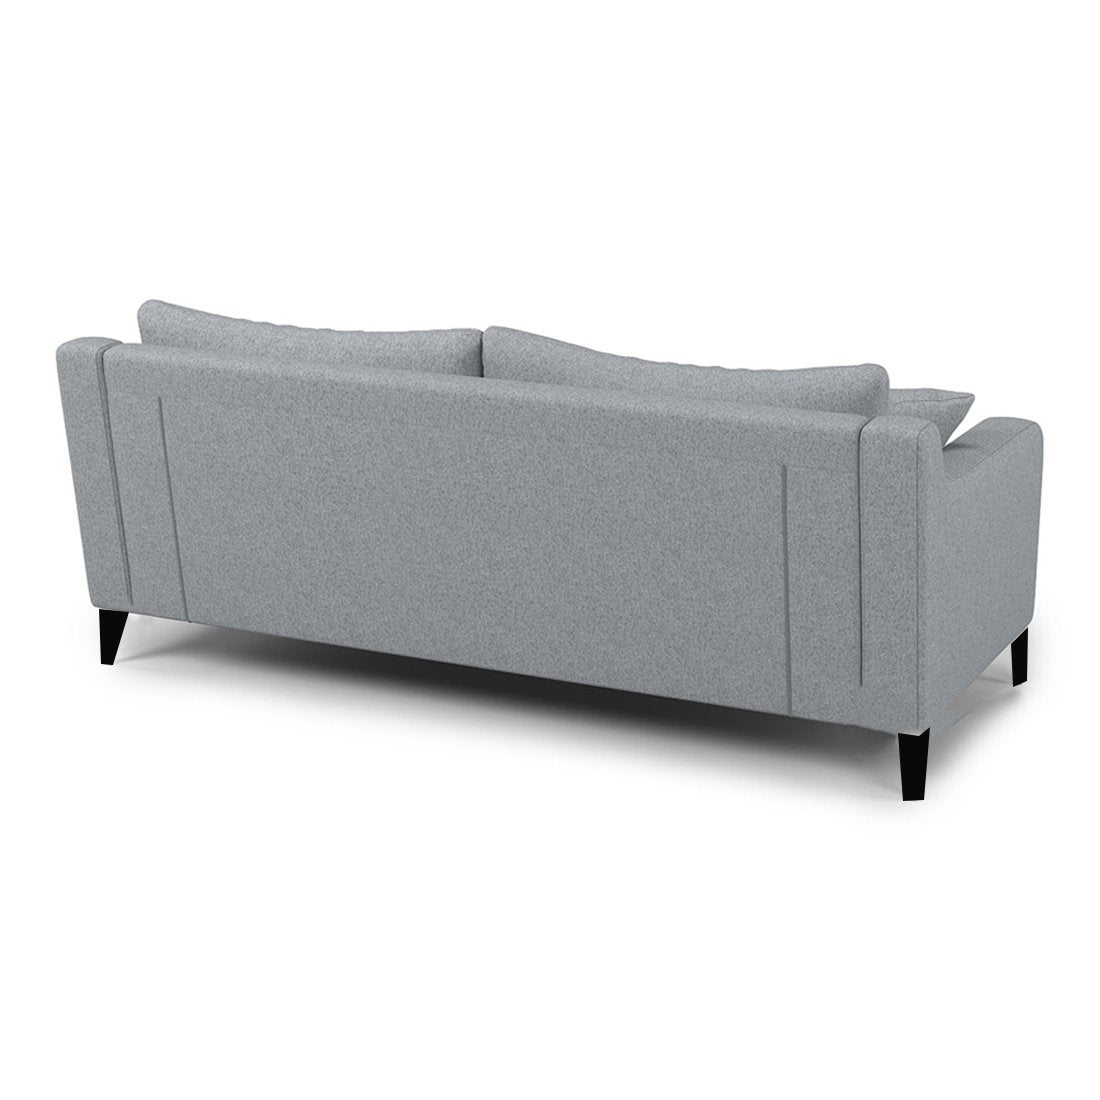 Mario 2 Seater Fabric Sofa For Living Room (Light Grey) - Torque India